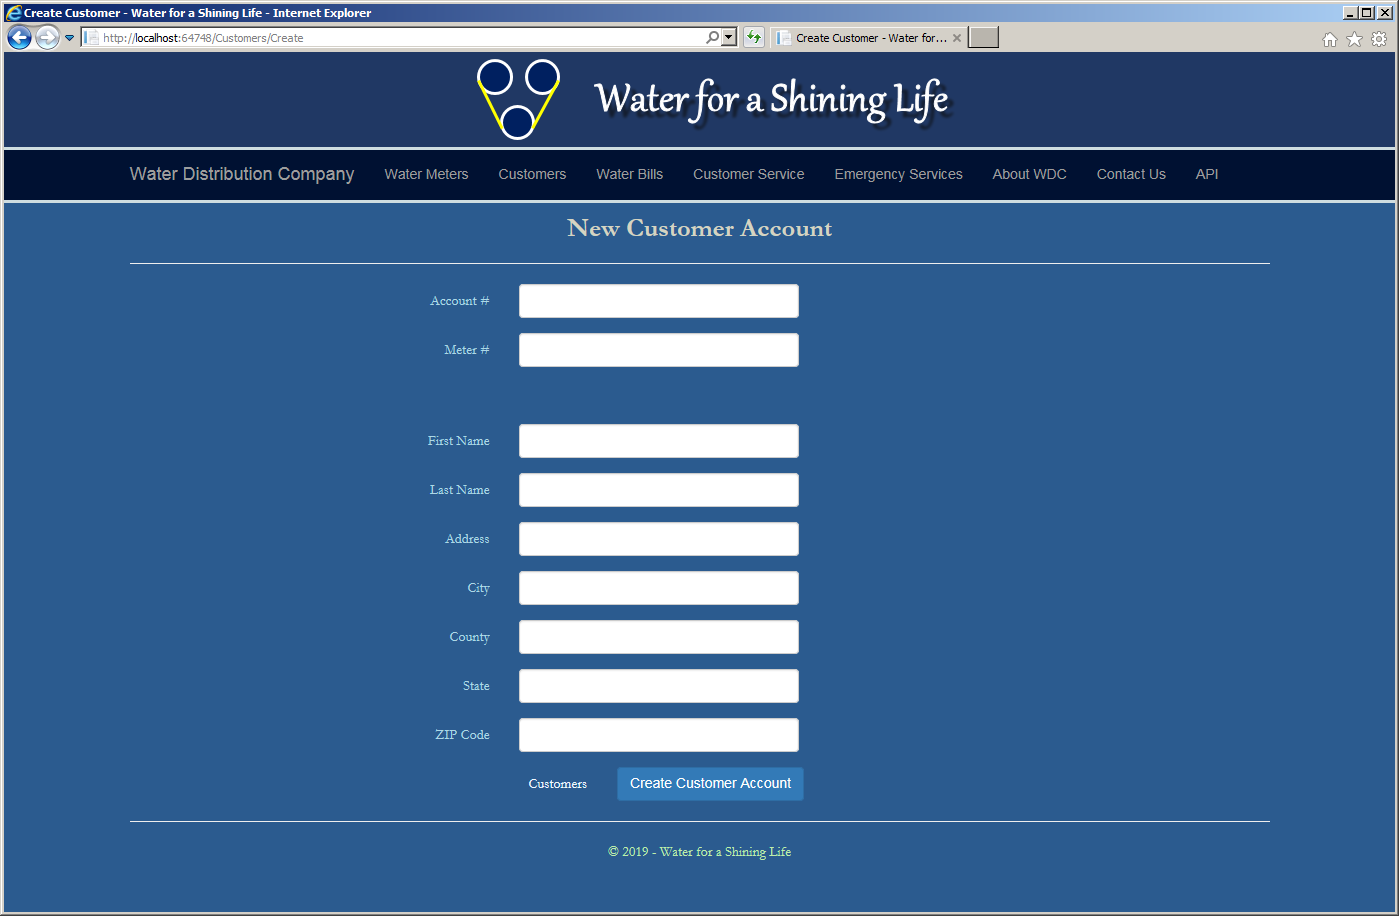 Water Distribution Company - New Customer Account